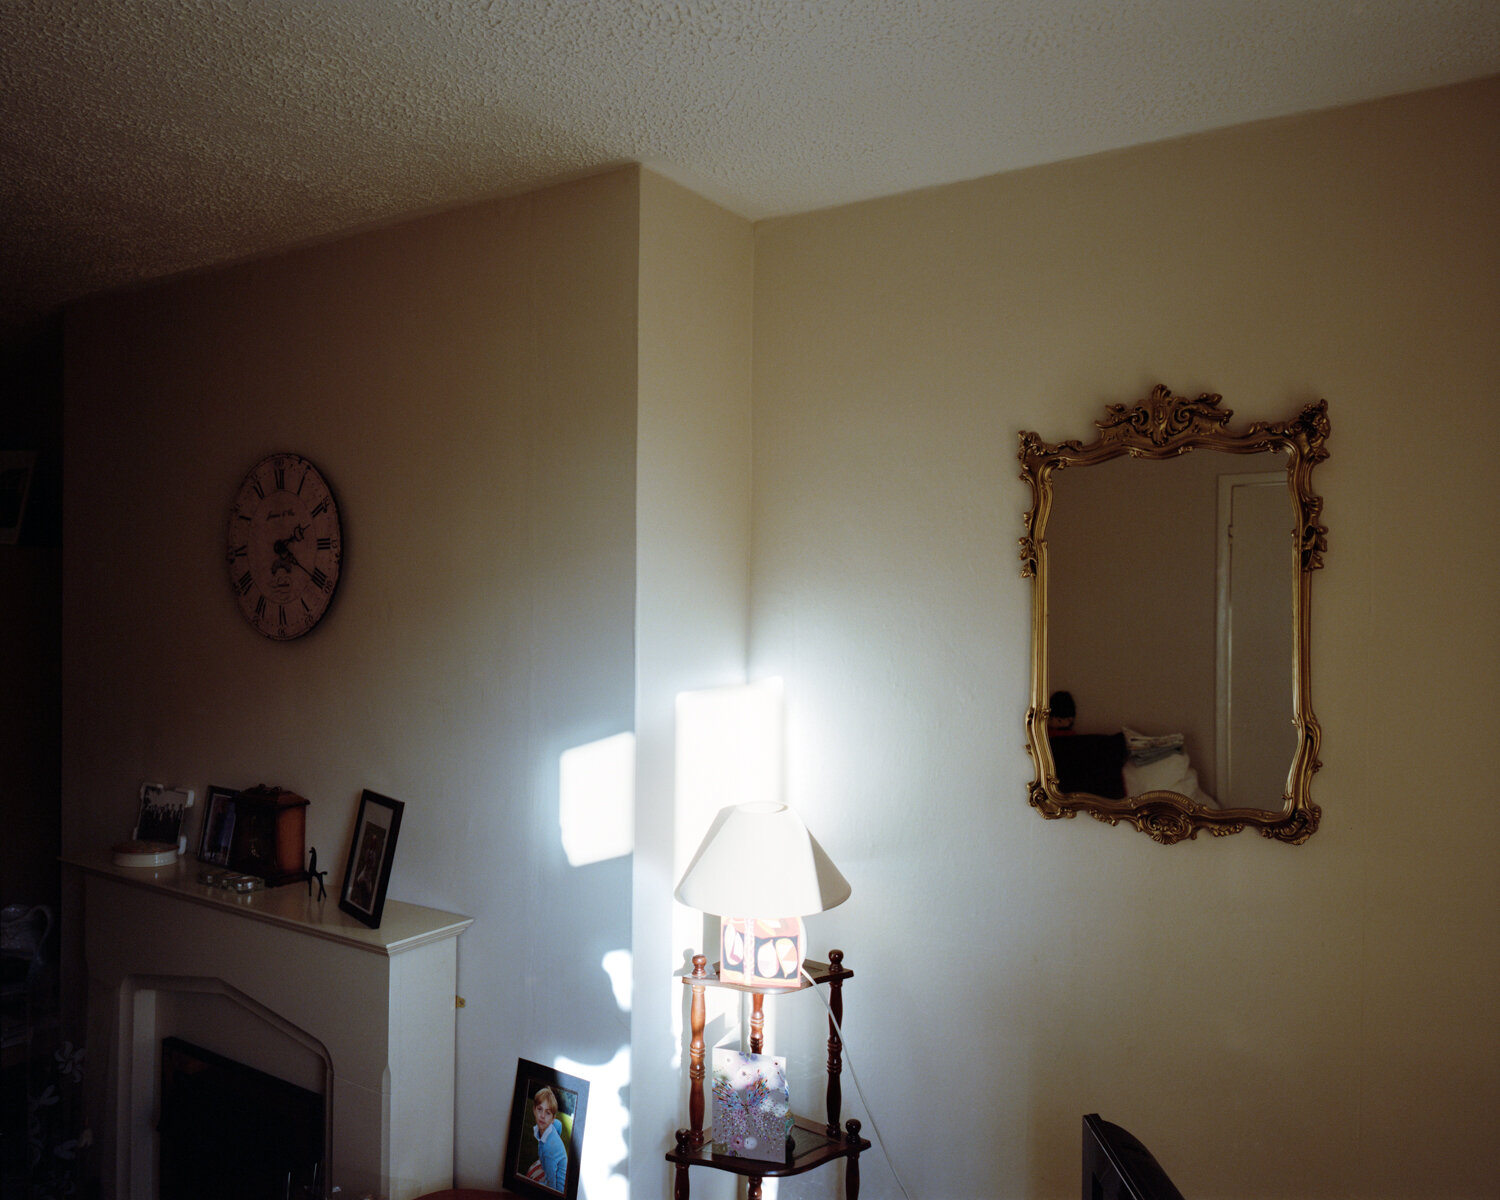 44) Sun Piecing Through The Window.jpg